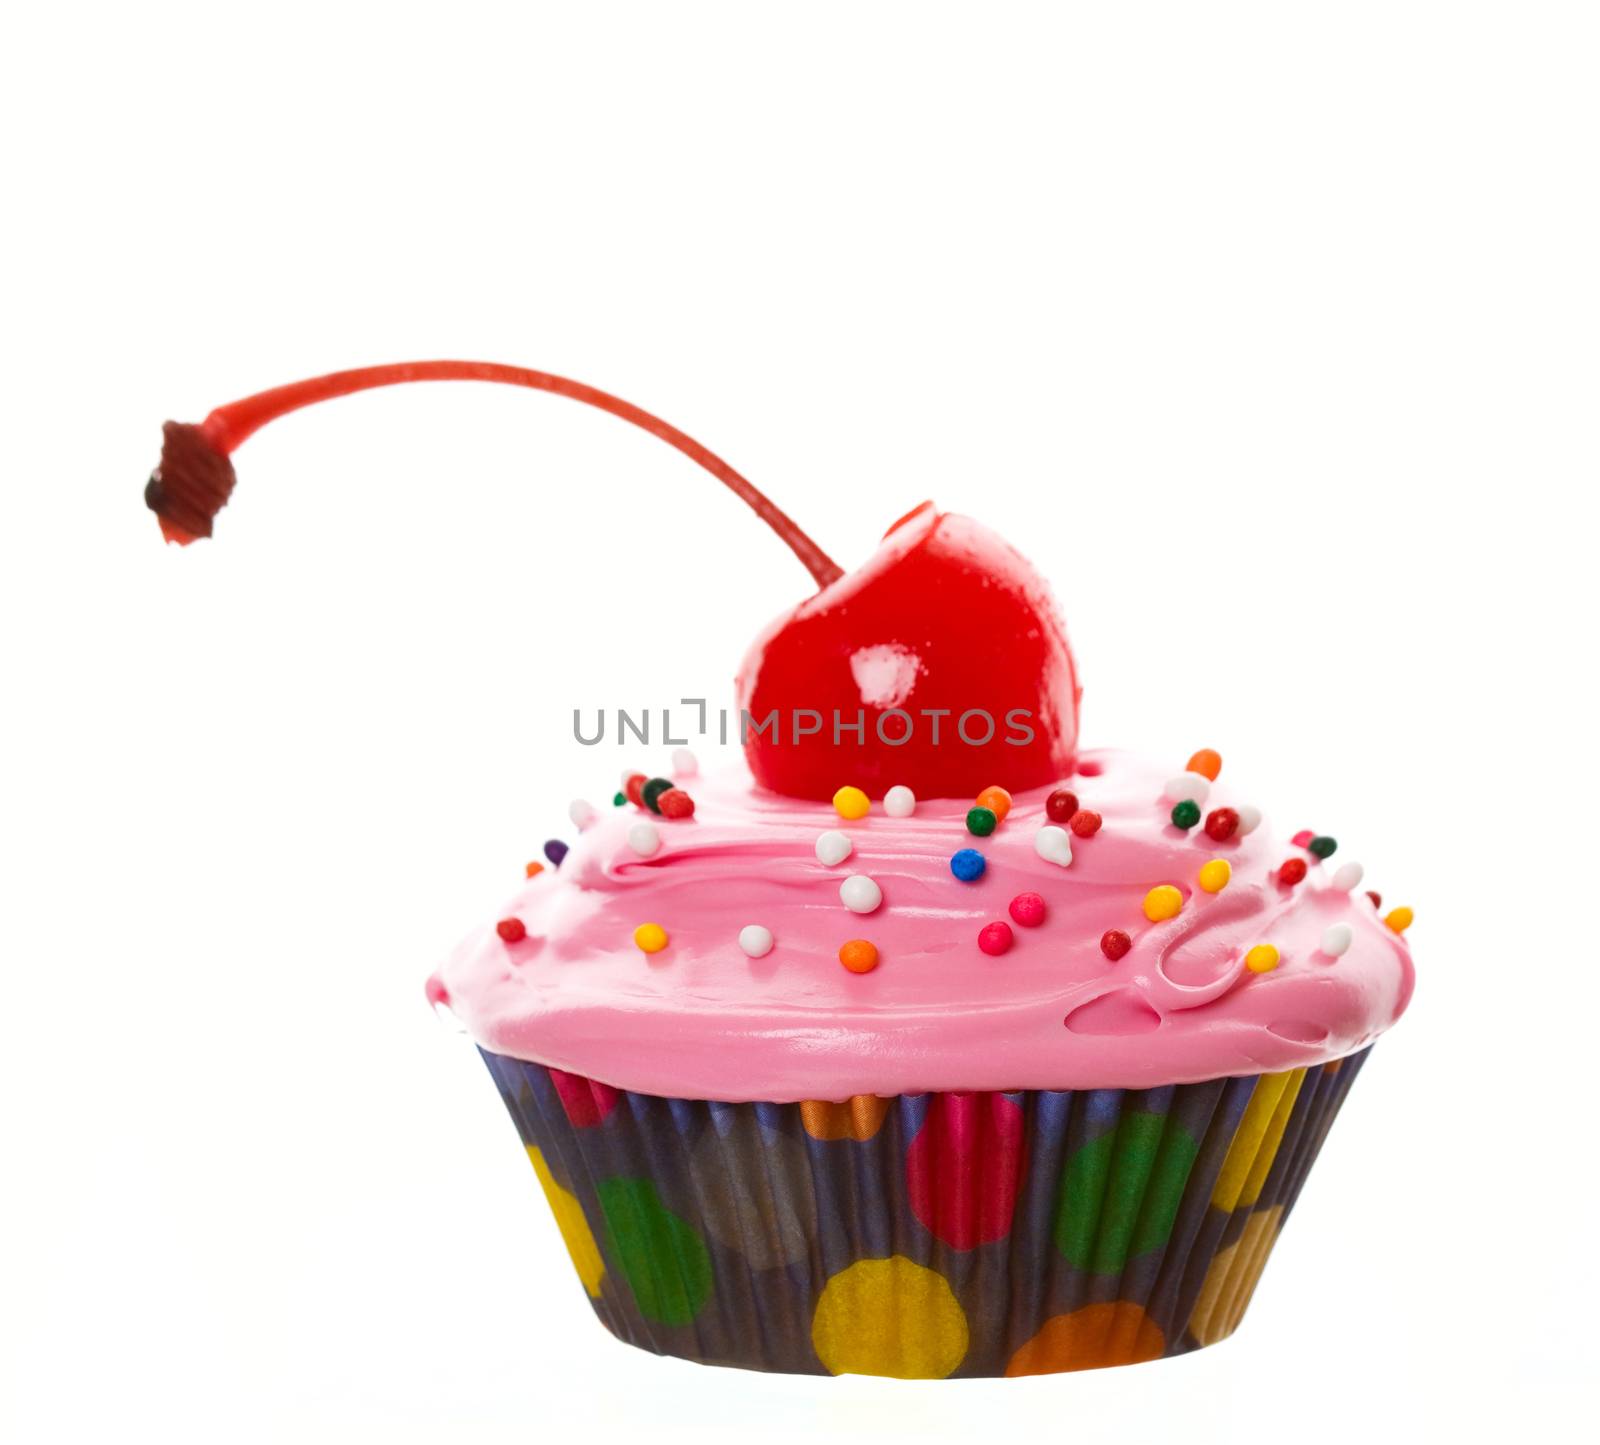 Big Cherry Cupcake by songbird839